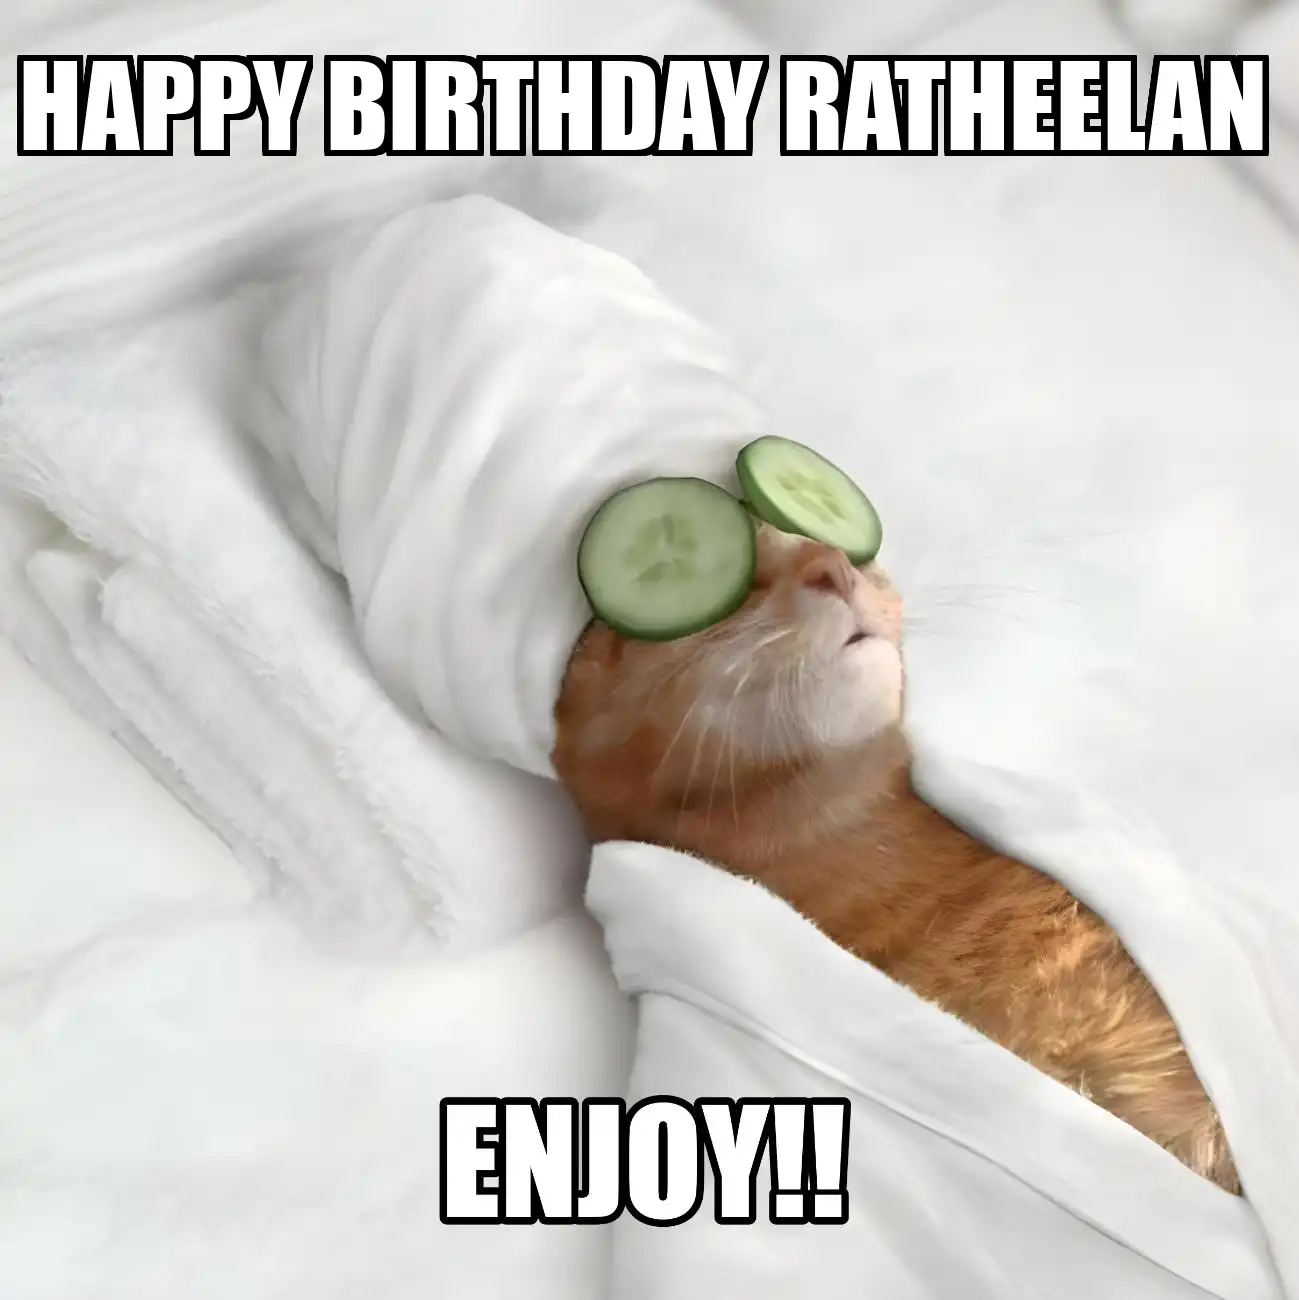 Happy Birthday Ratheelan Enjoy Cat Meme